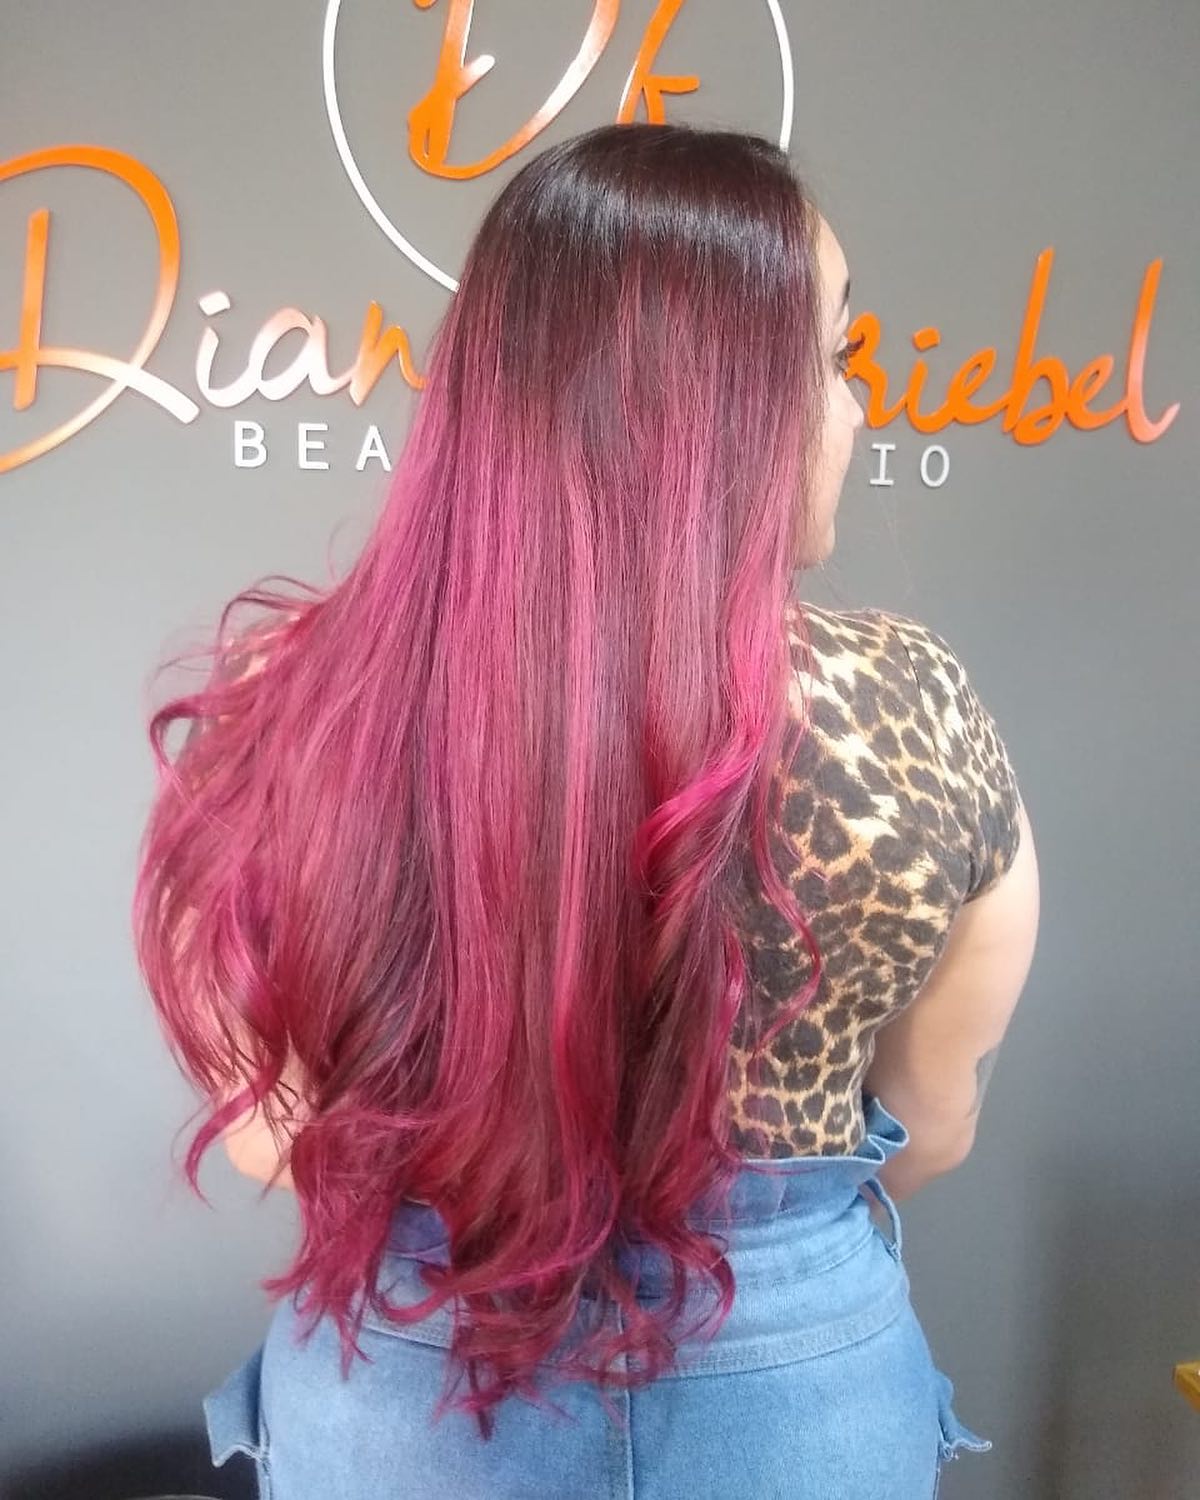 81749889 115026083226927 2774868829544400552 n - Ombré hair rosa: 60 inspirações, trends